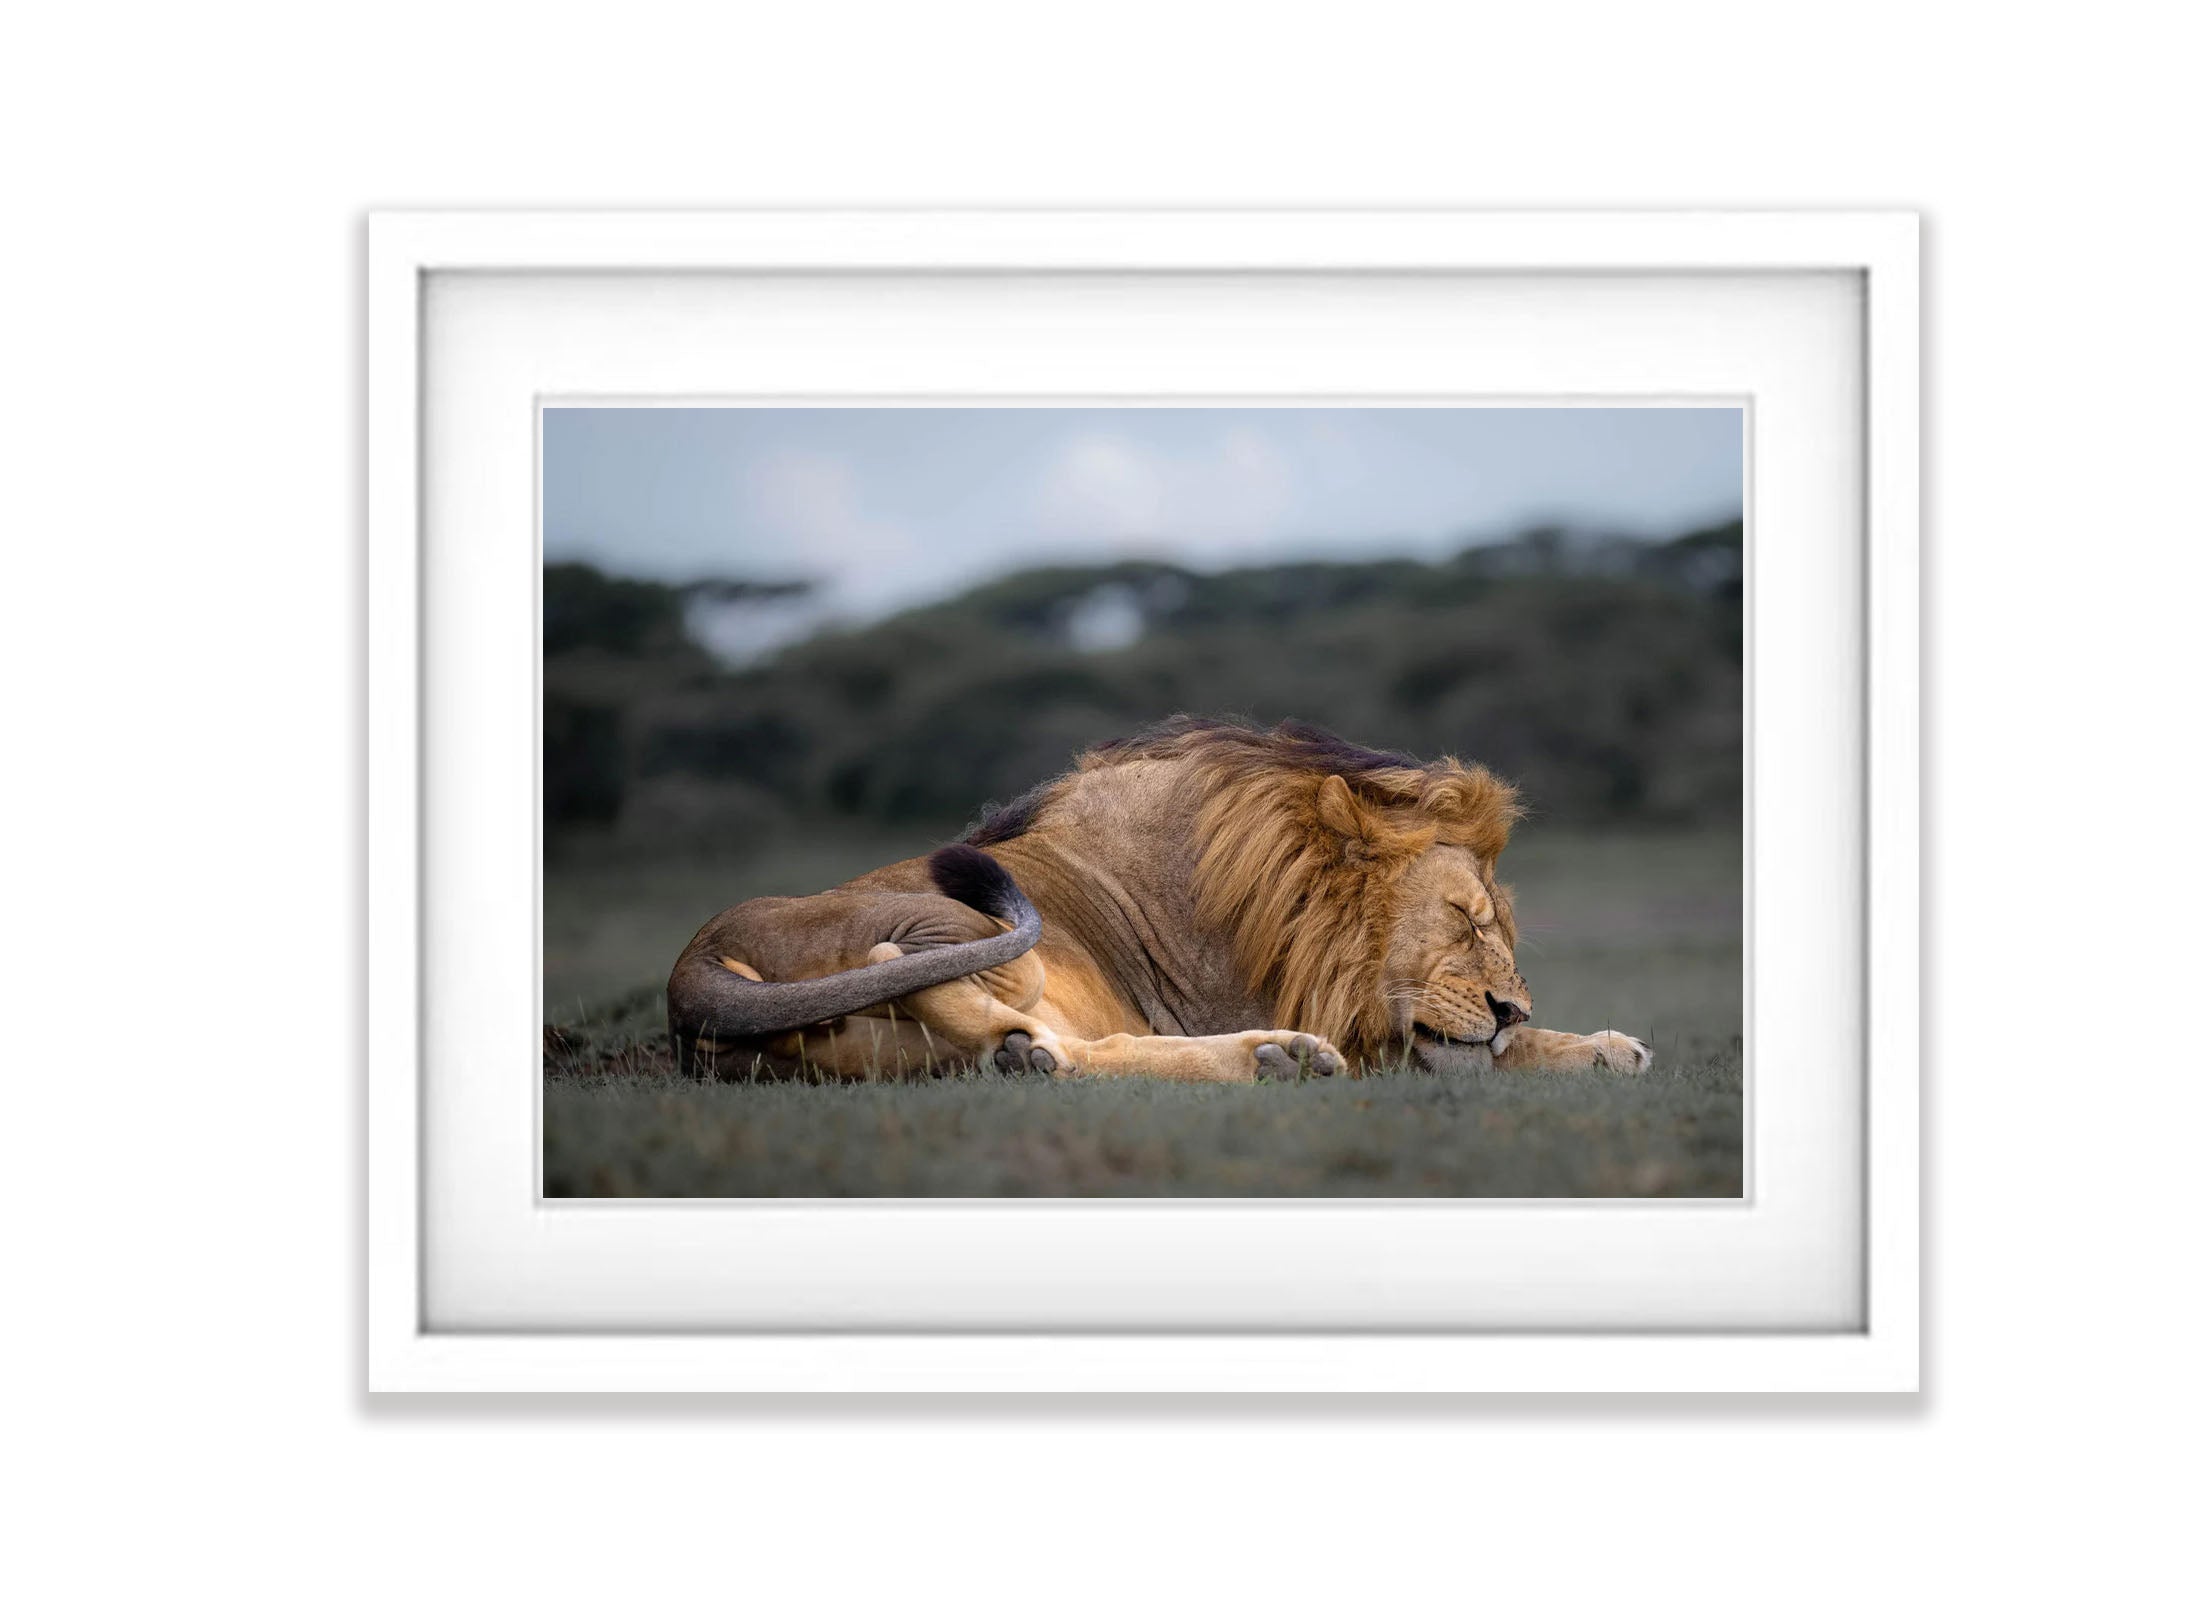 Sleeping Lion, Tanzania